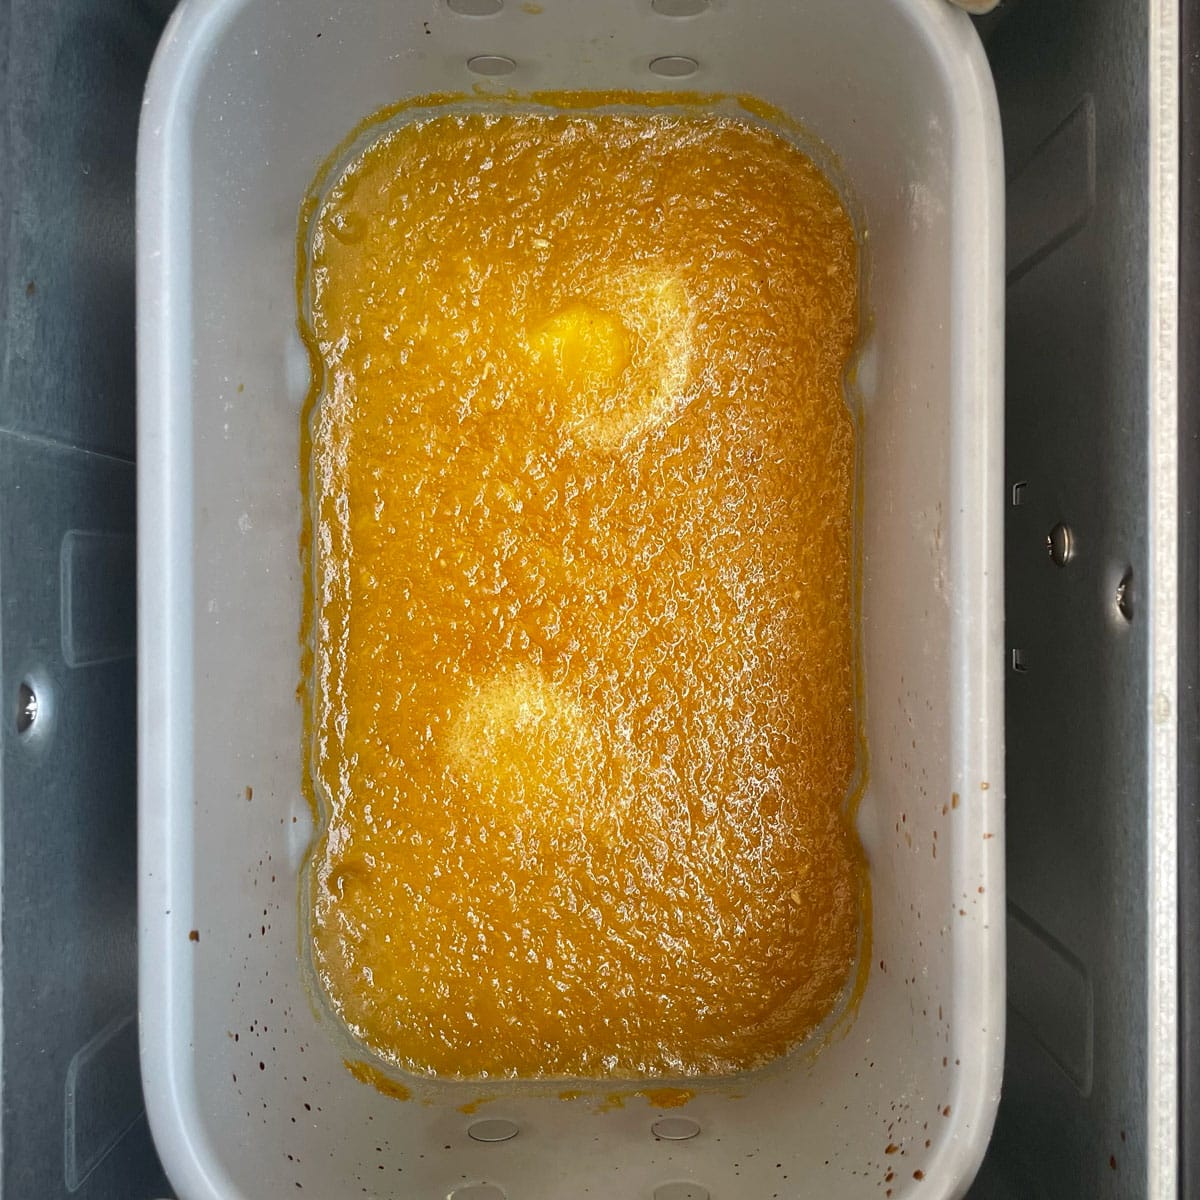 Pineapple jam in bread machine container.